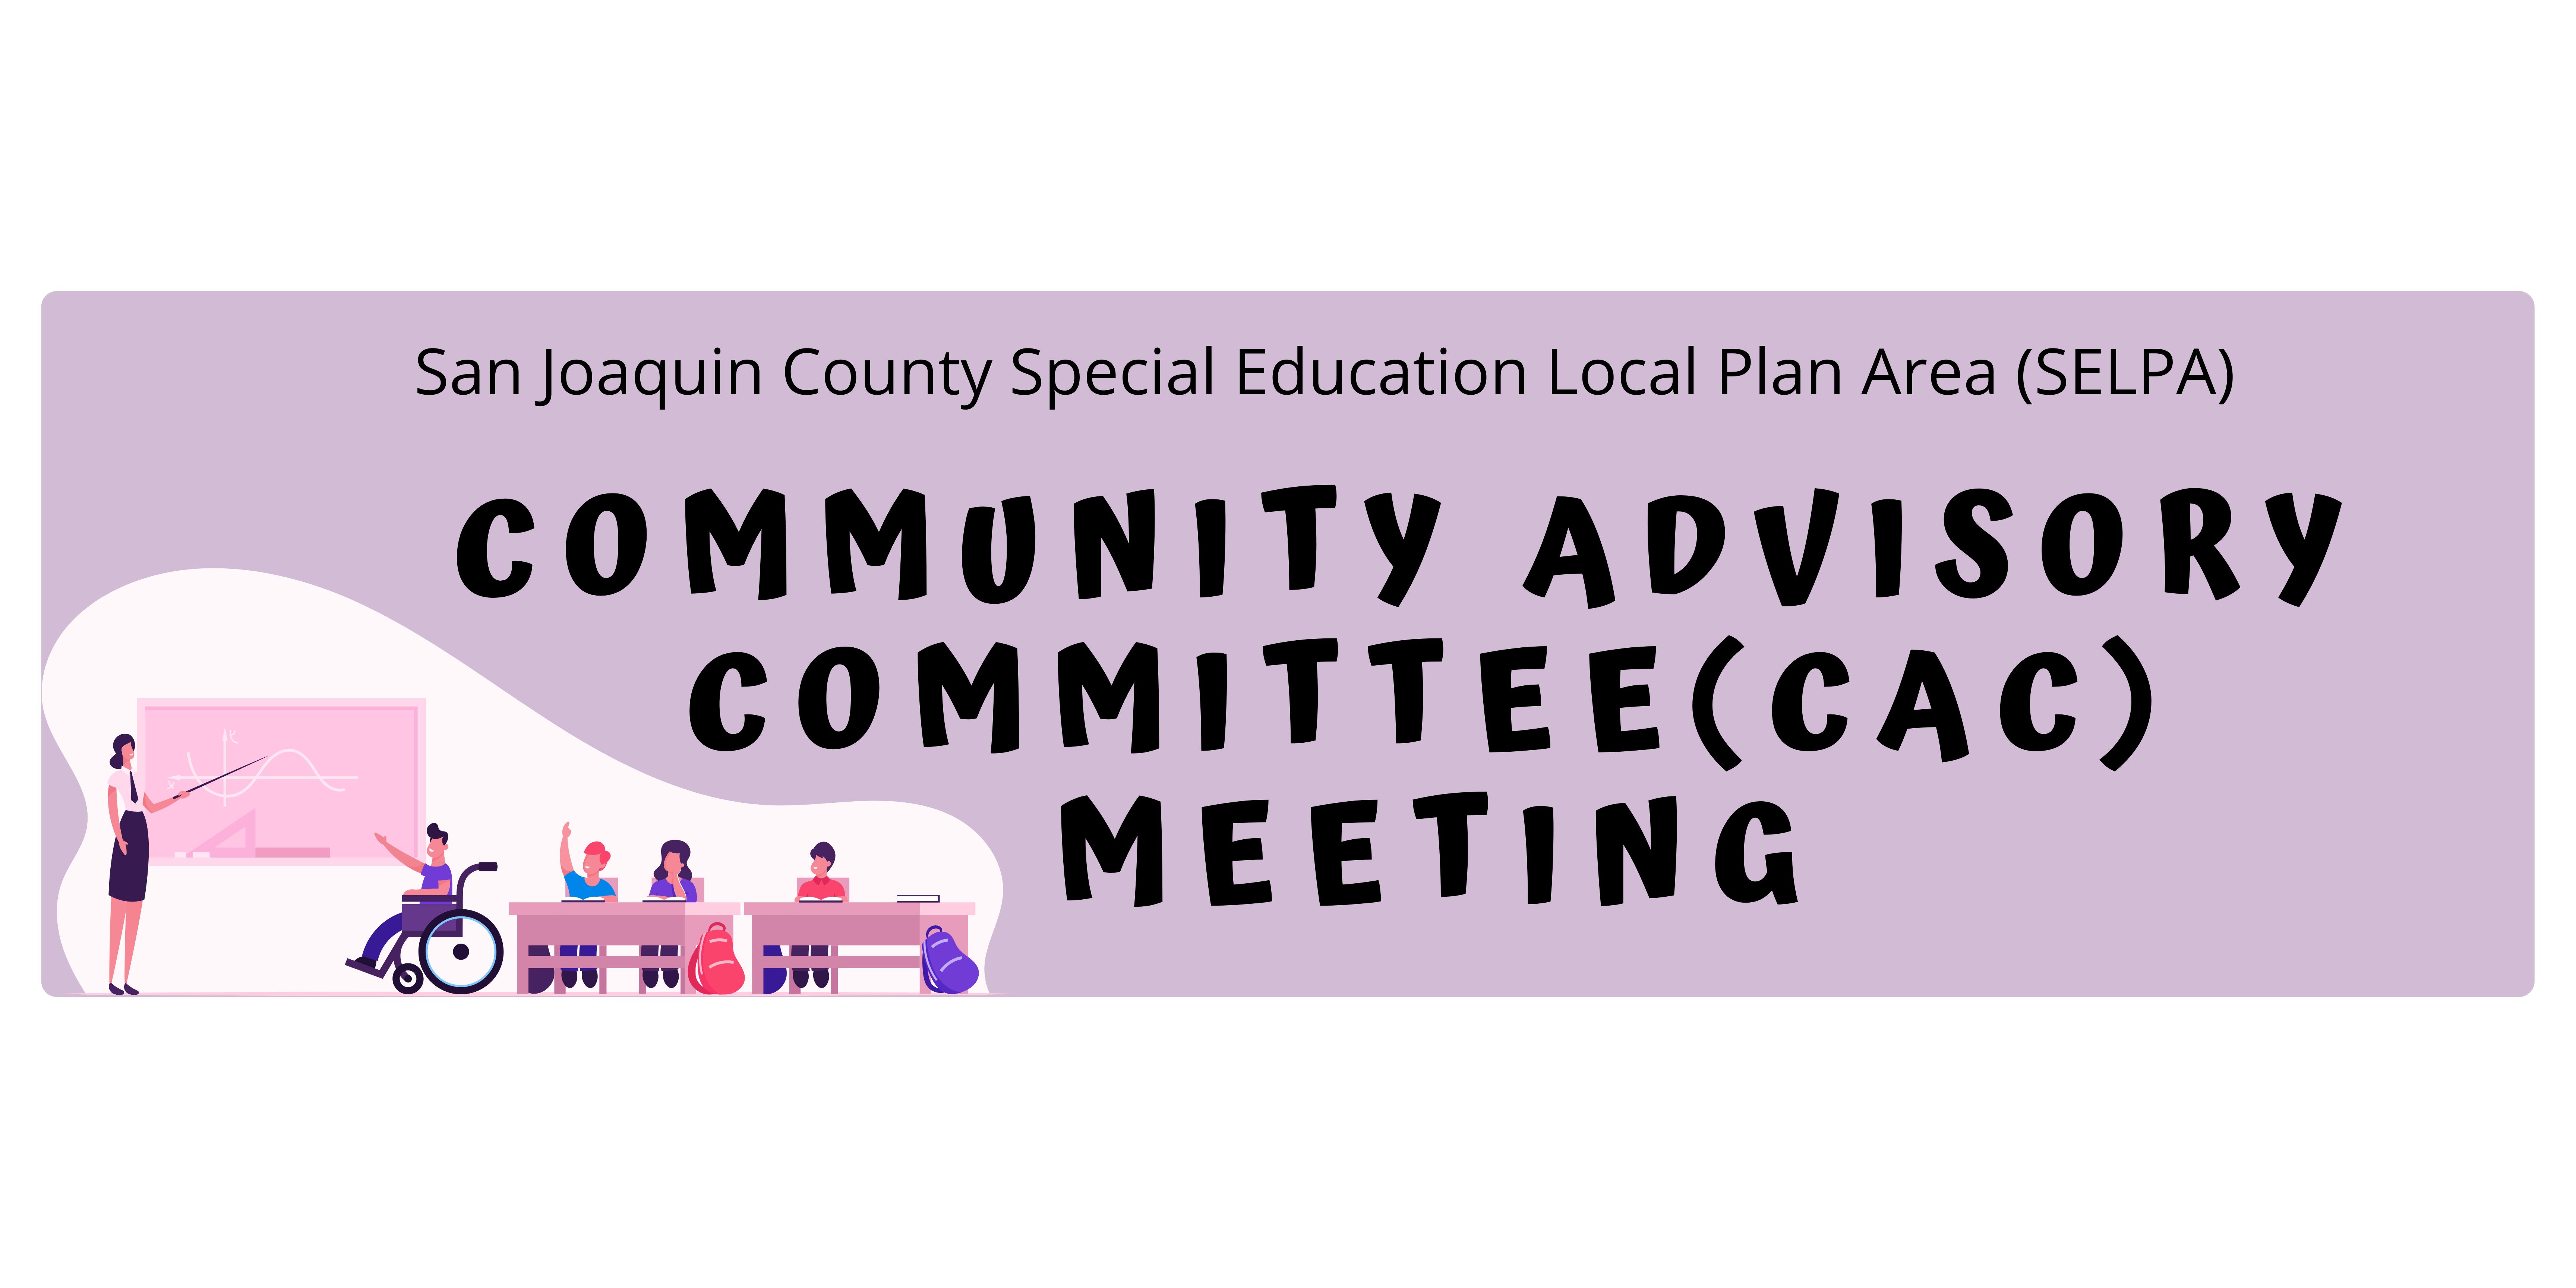 Community Advisory Committee (CAC) Meeting